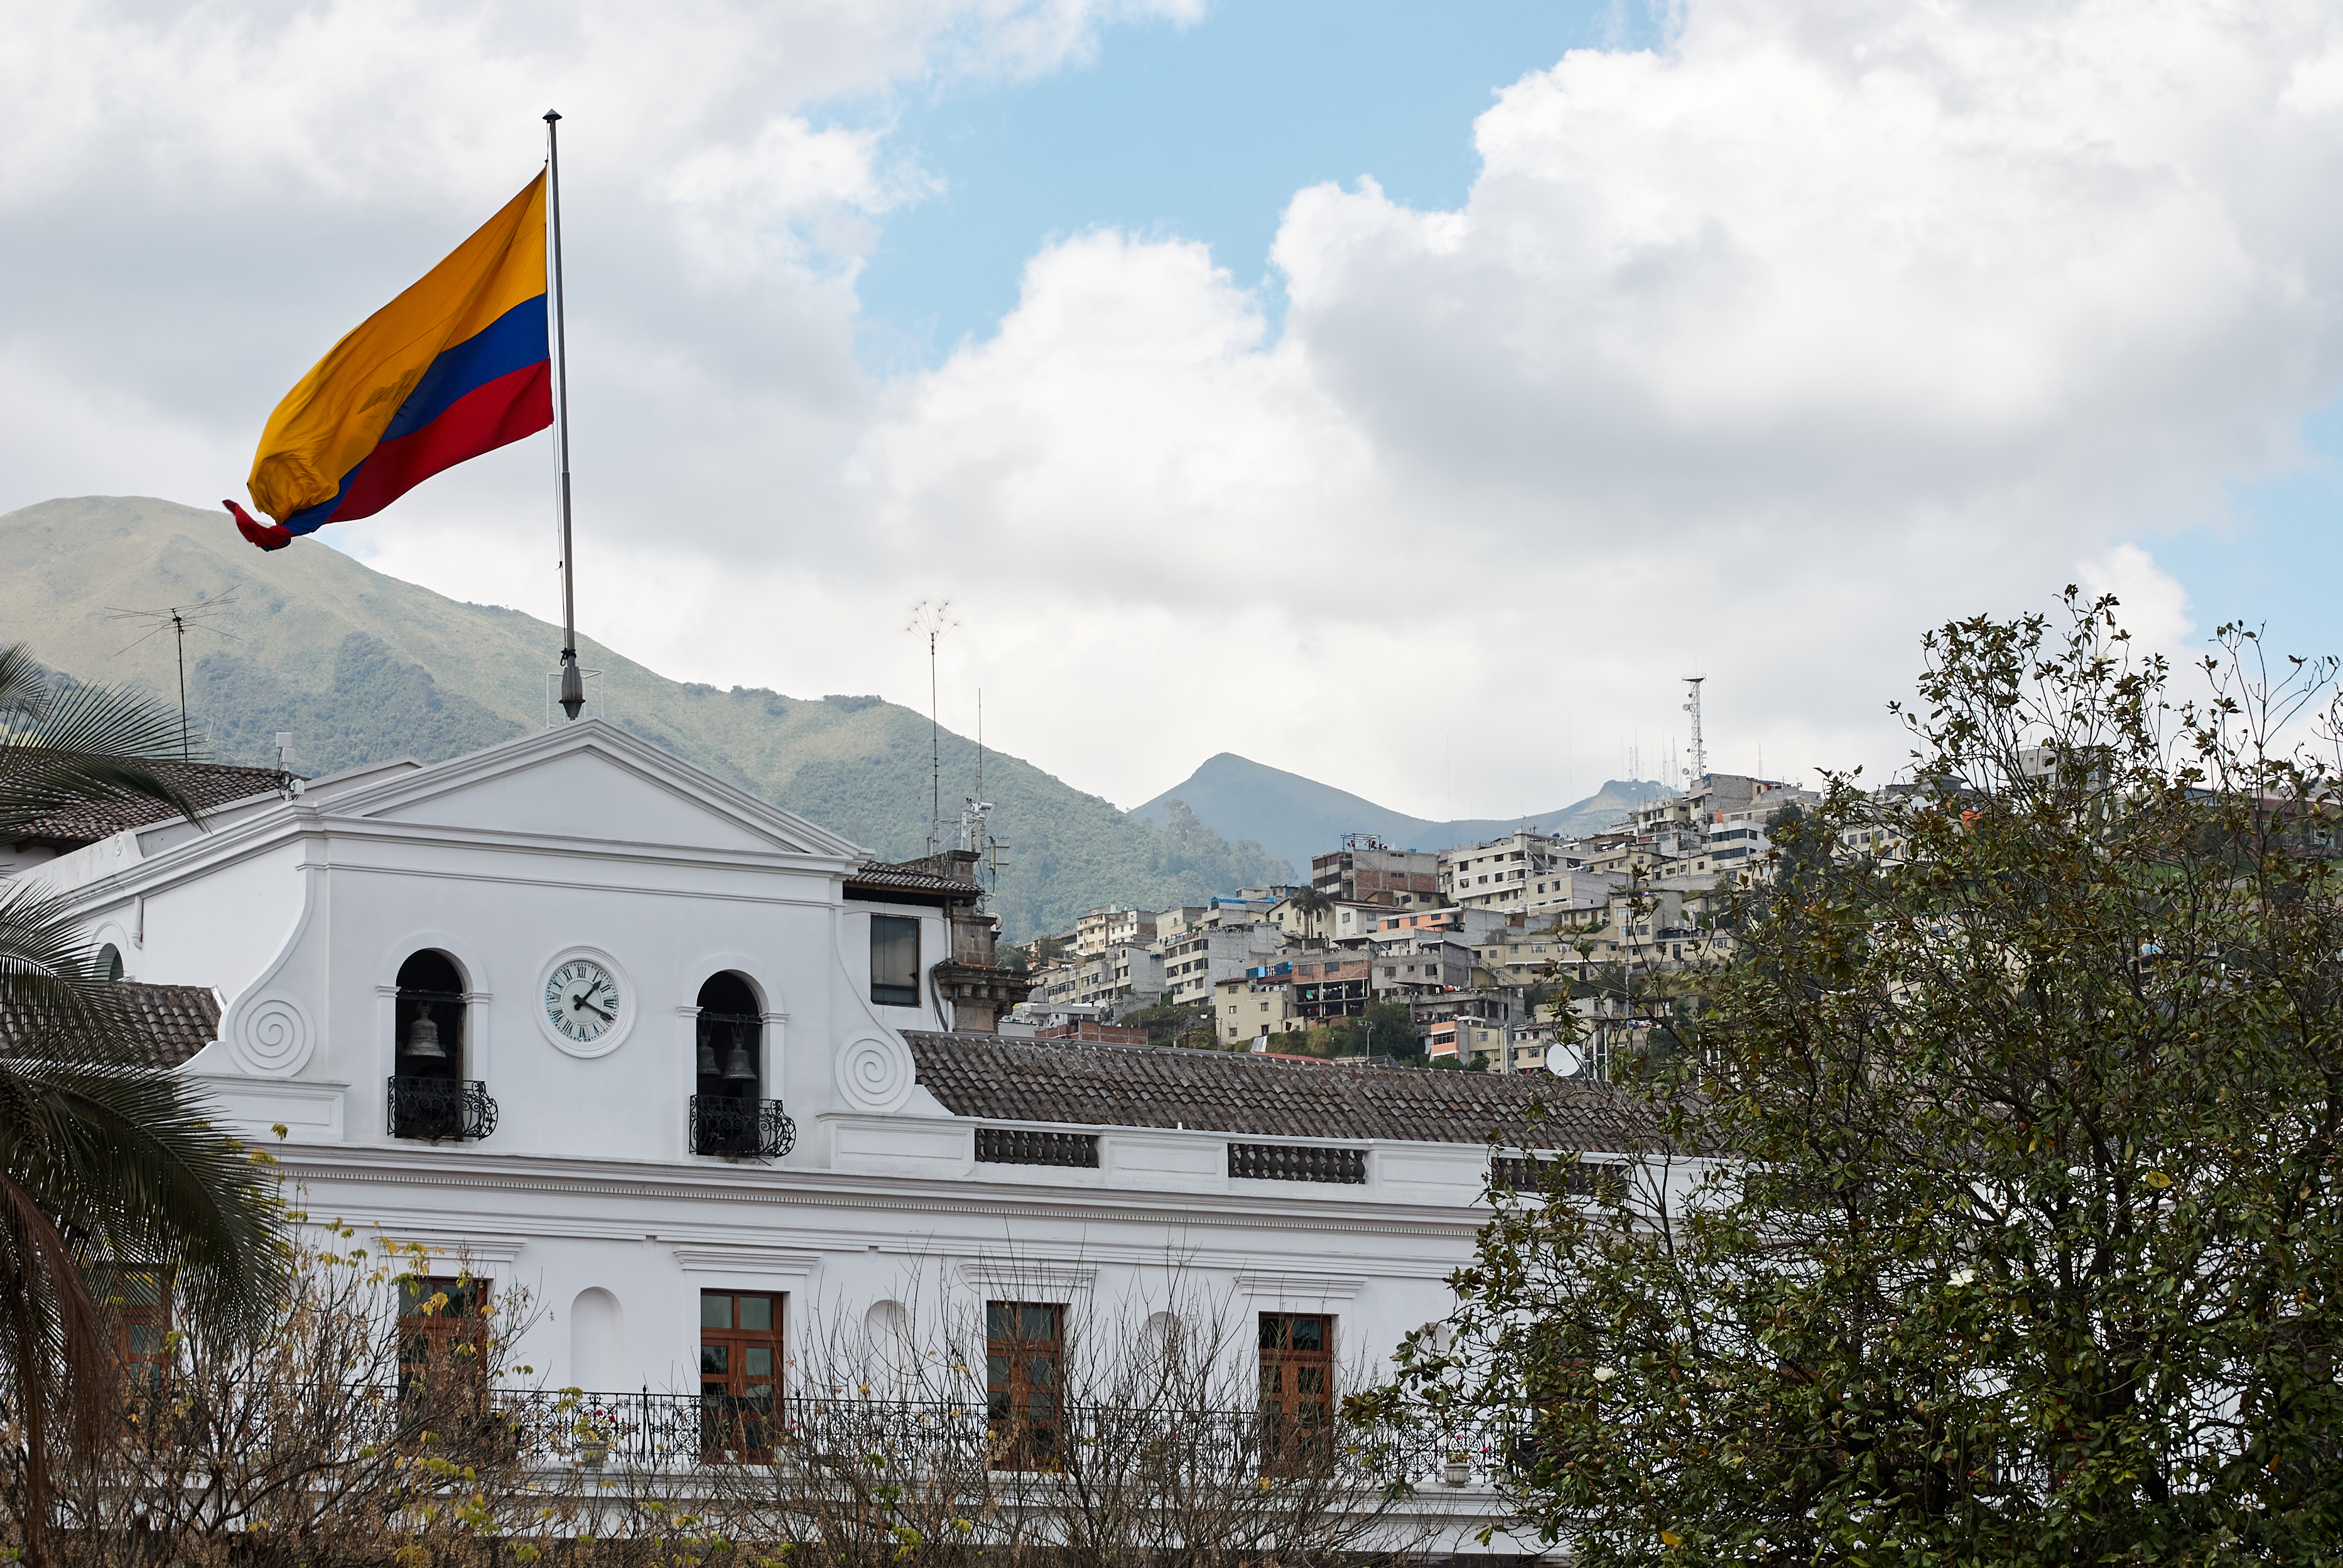 Ecuador's flag on top of a government building